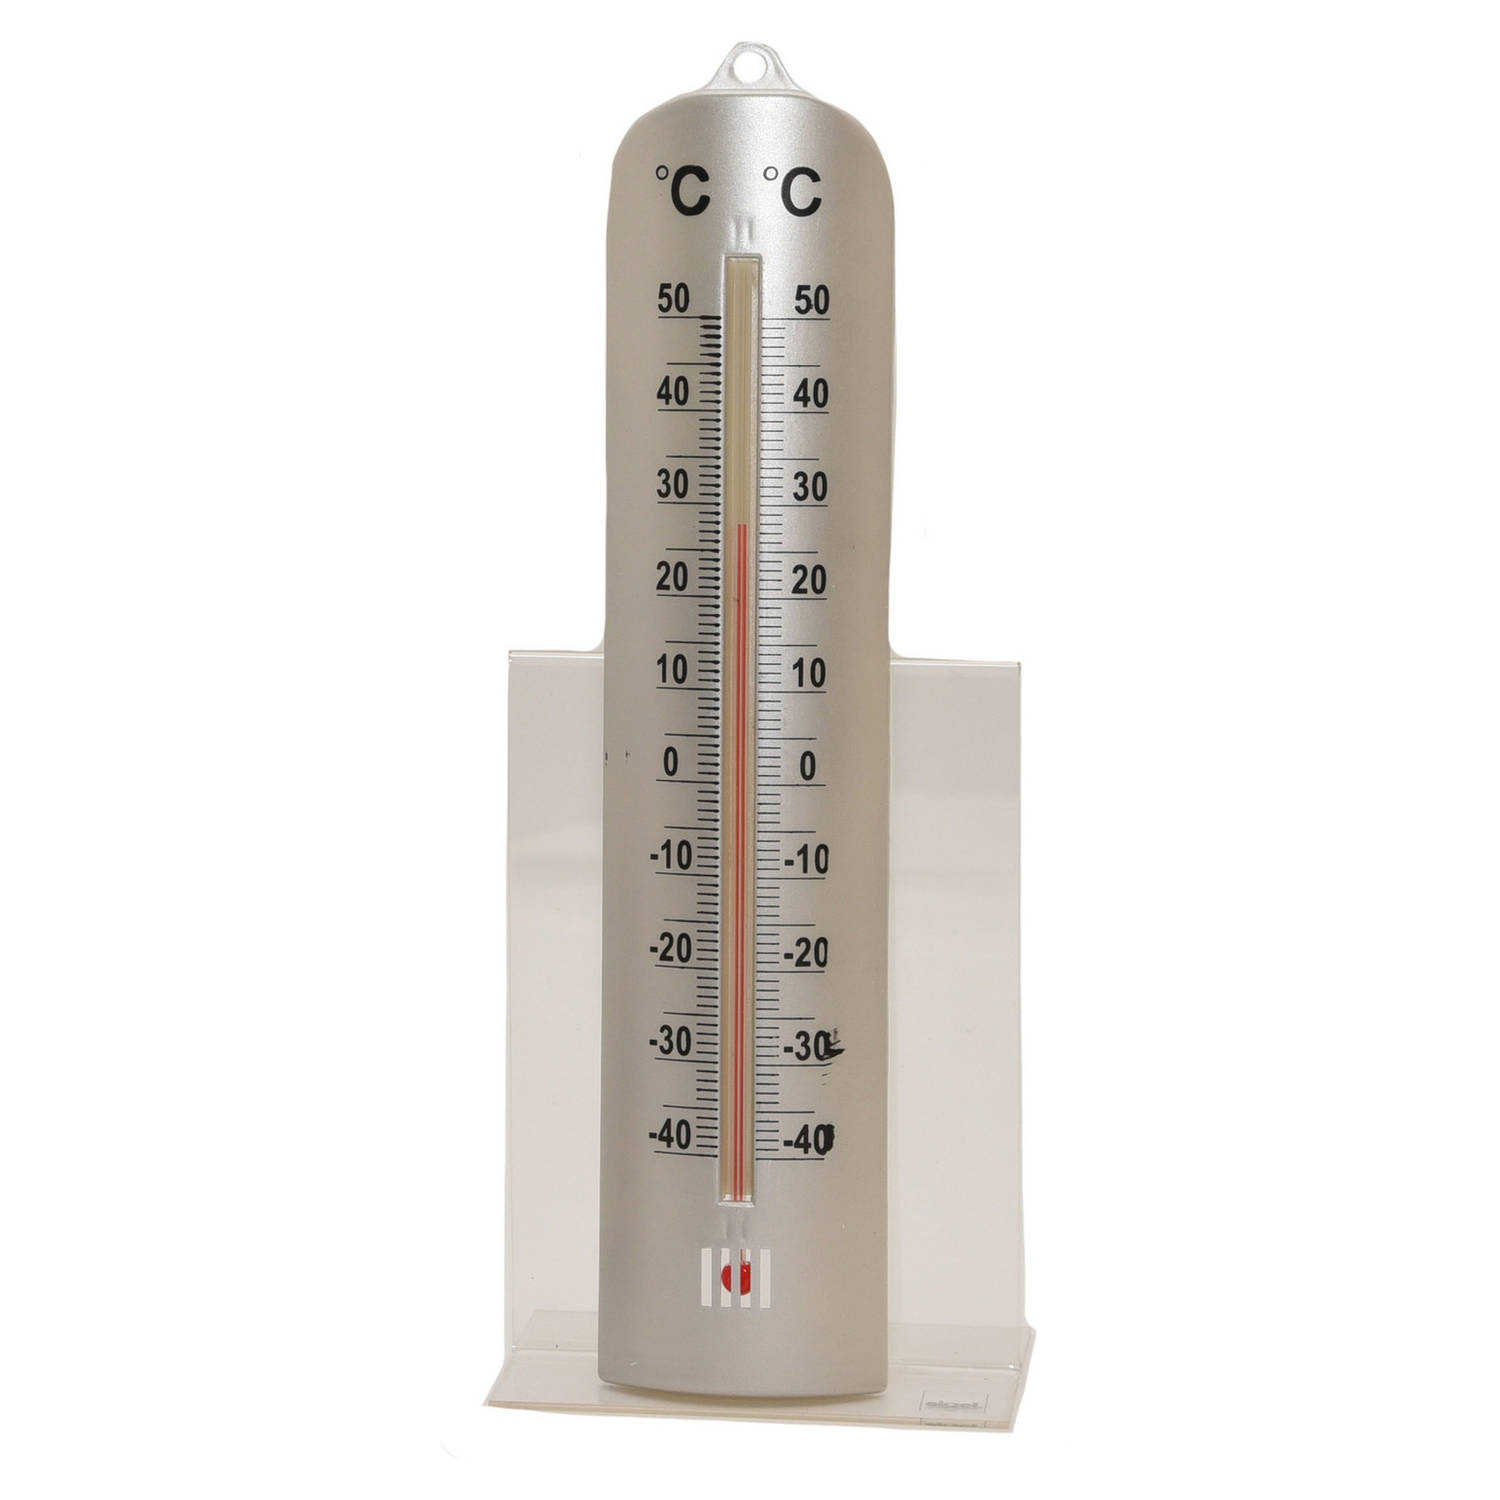 Bedachtzaam Nylon fout Binnen/buiten thermometer RVS look 26 x 6 cm - Buitenthermometers | Blokker